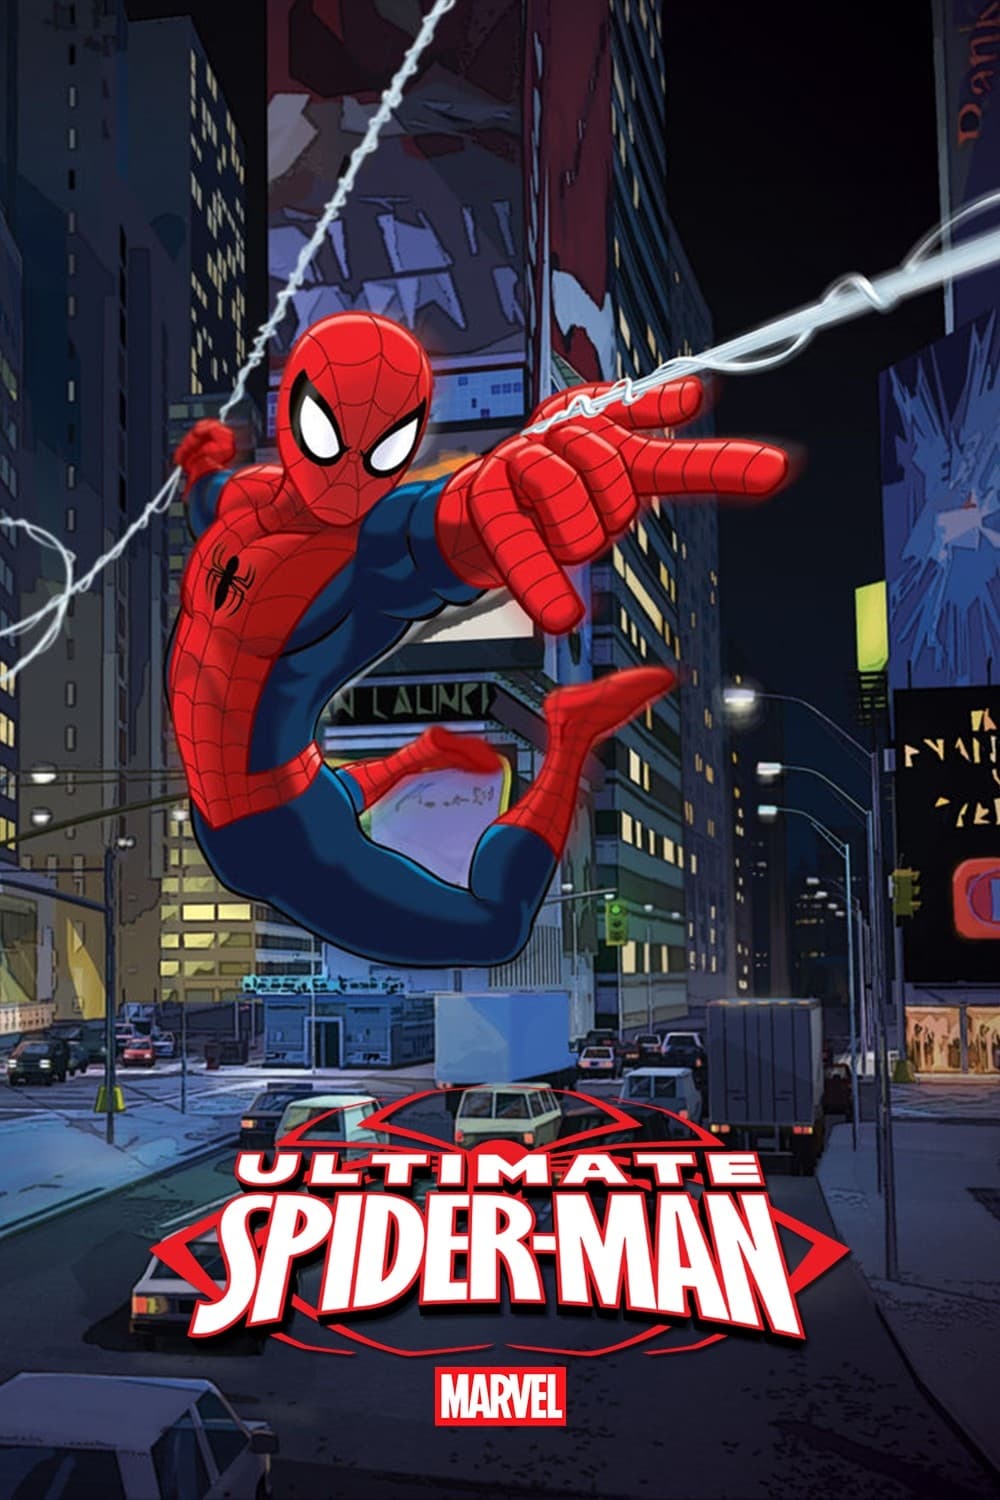 Ultimate Spiderman (2012)